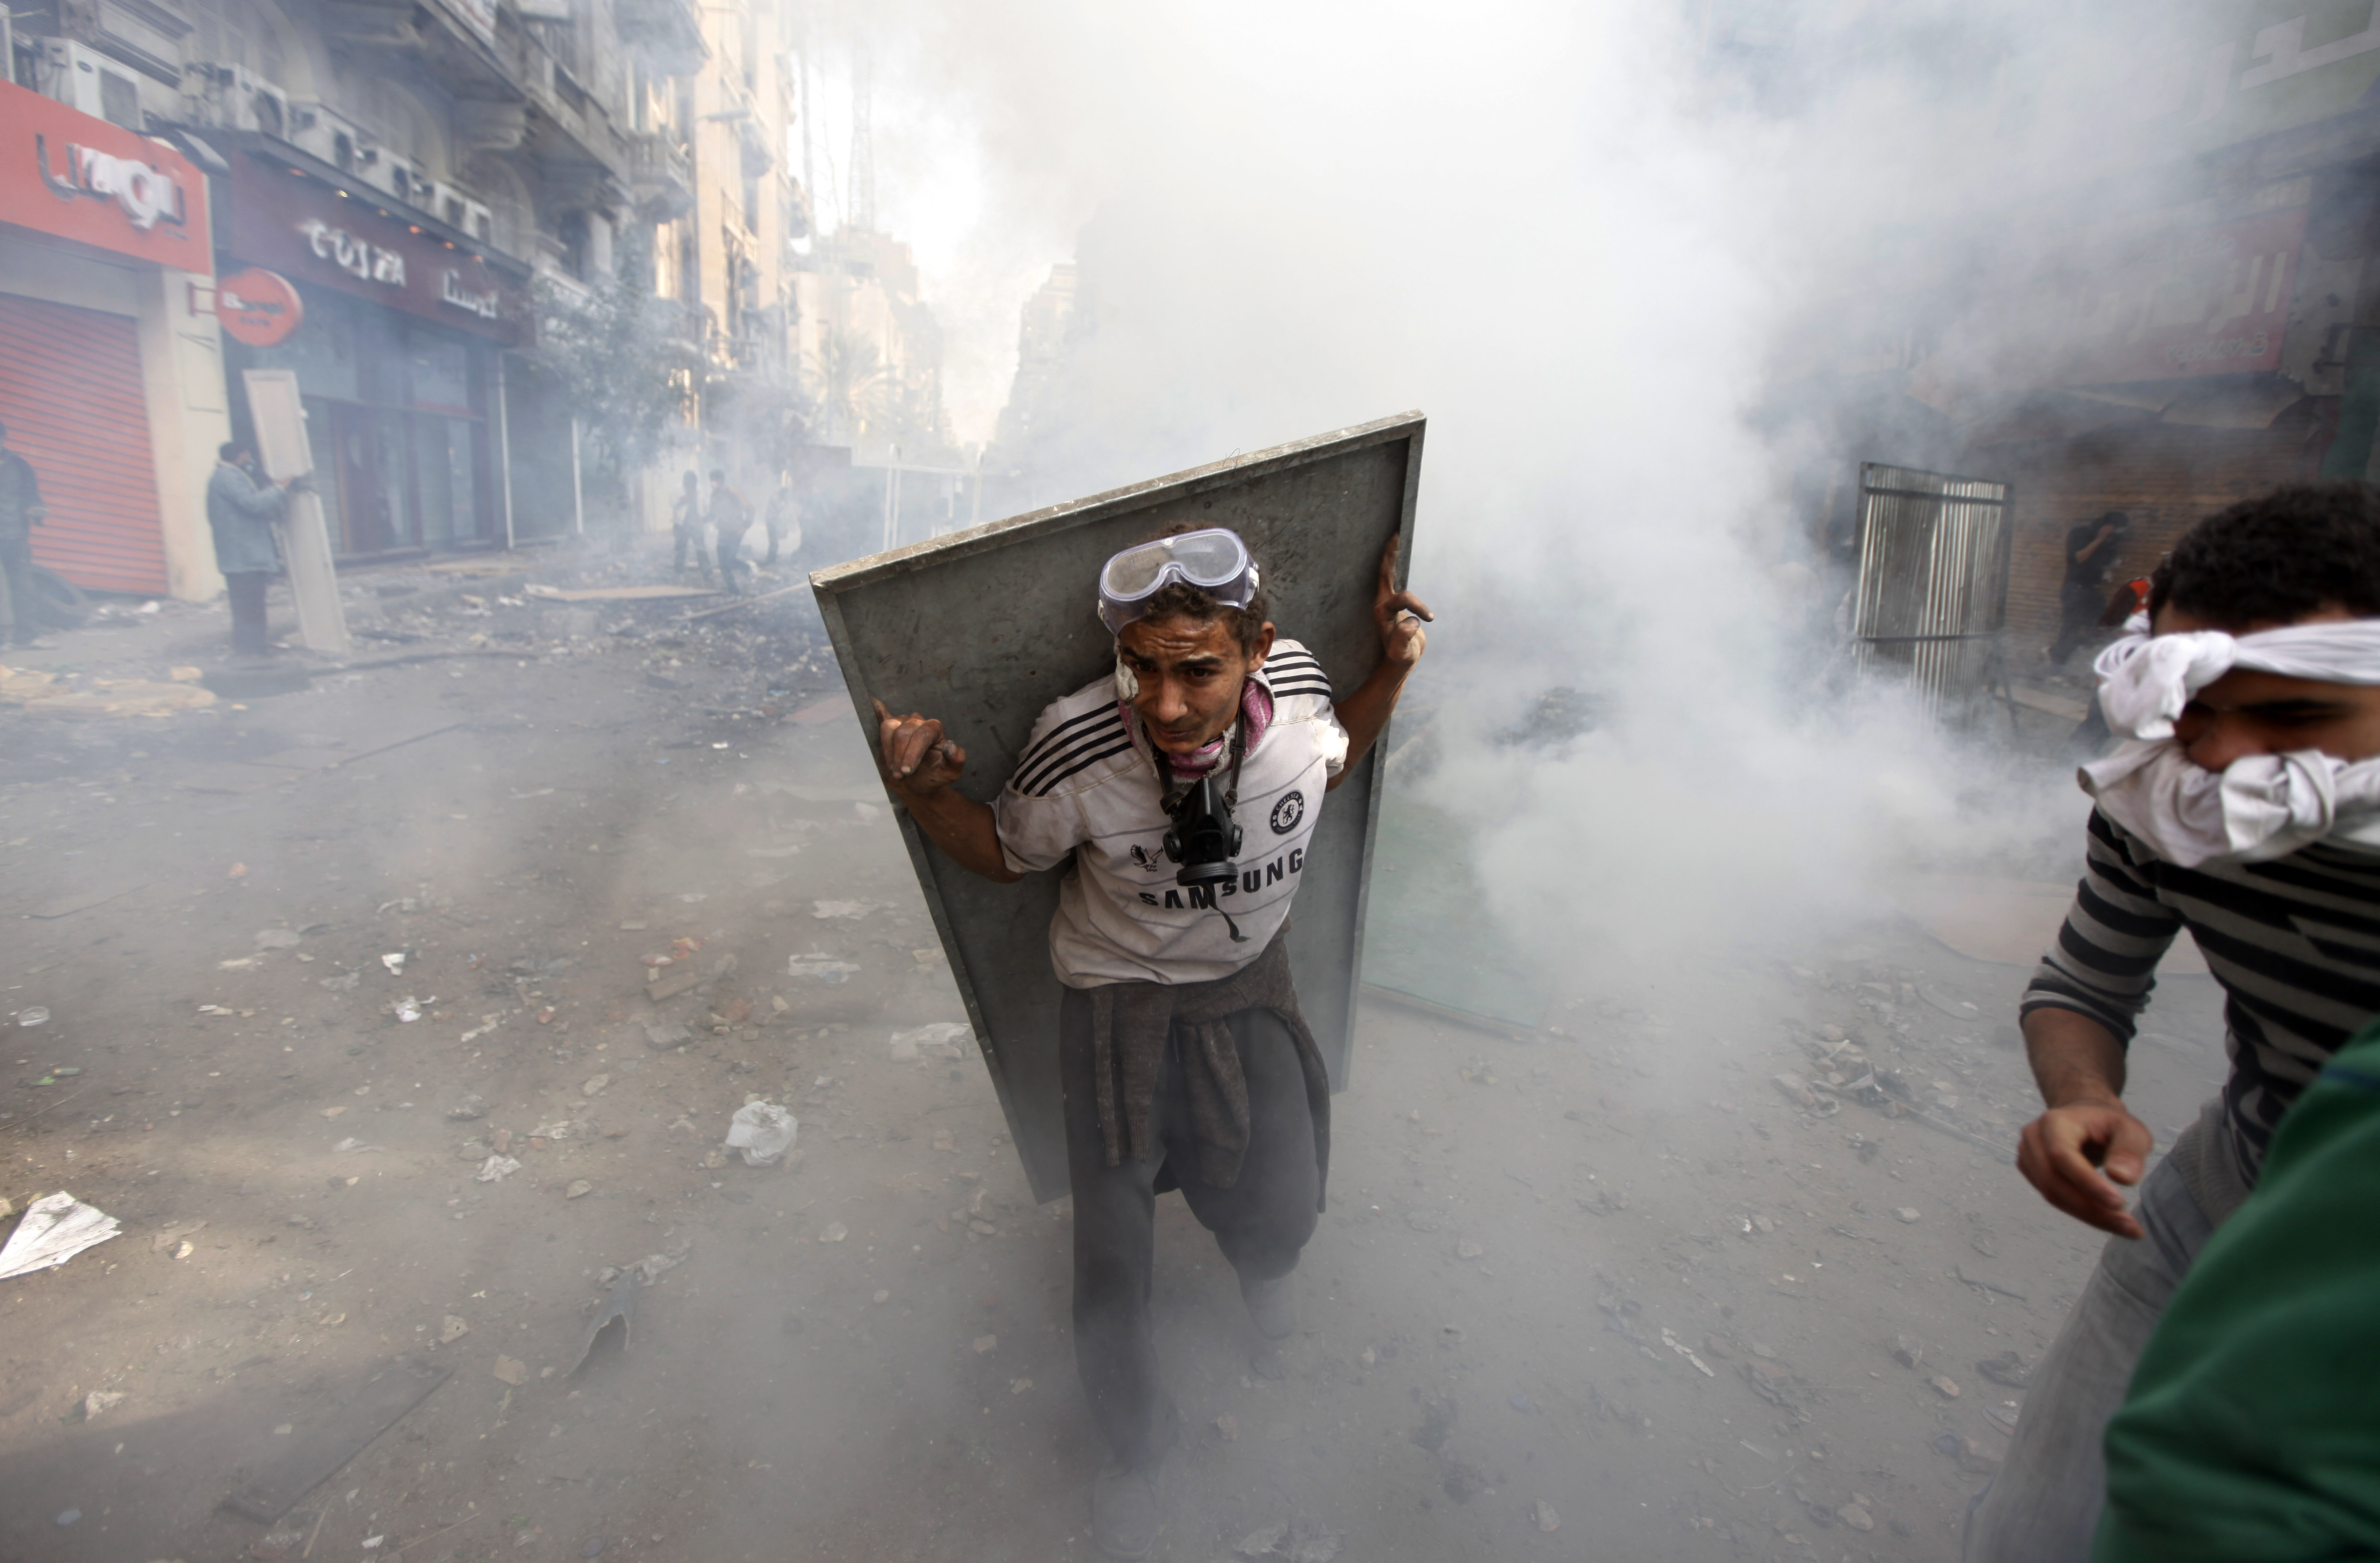 Tårgasen har använts frekvent mot demonstranter i Egypten den senaste tiden.